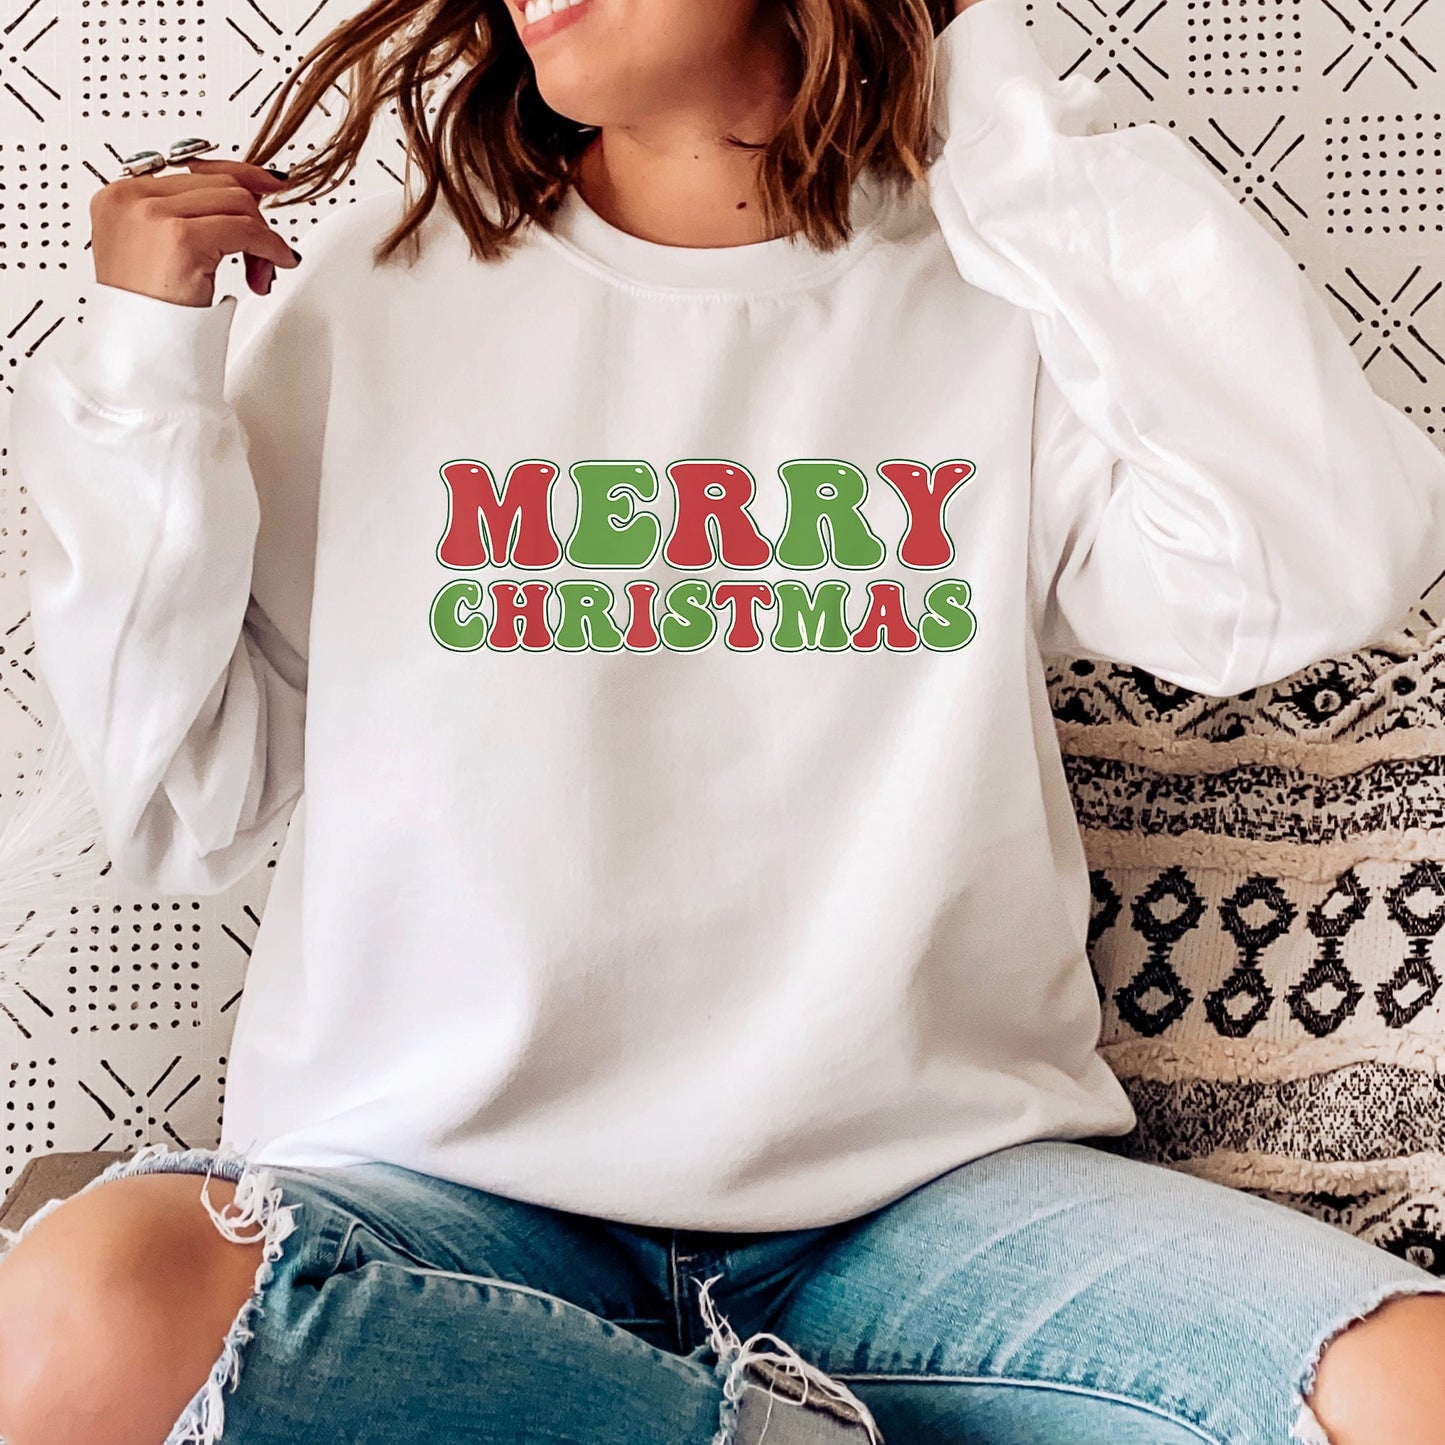 Christmas Sweatshirt, Christmas Party Sweatshirt, Christmas outfit Sweater